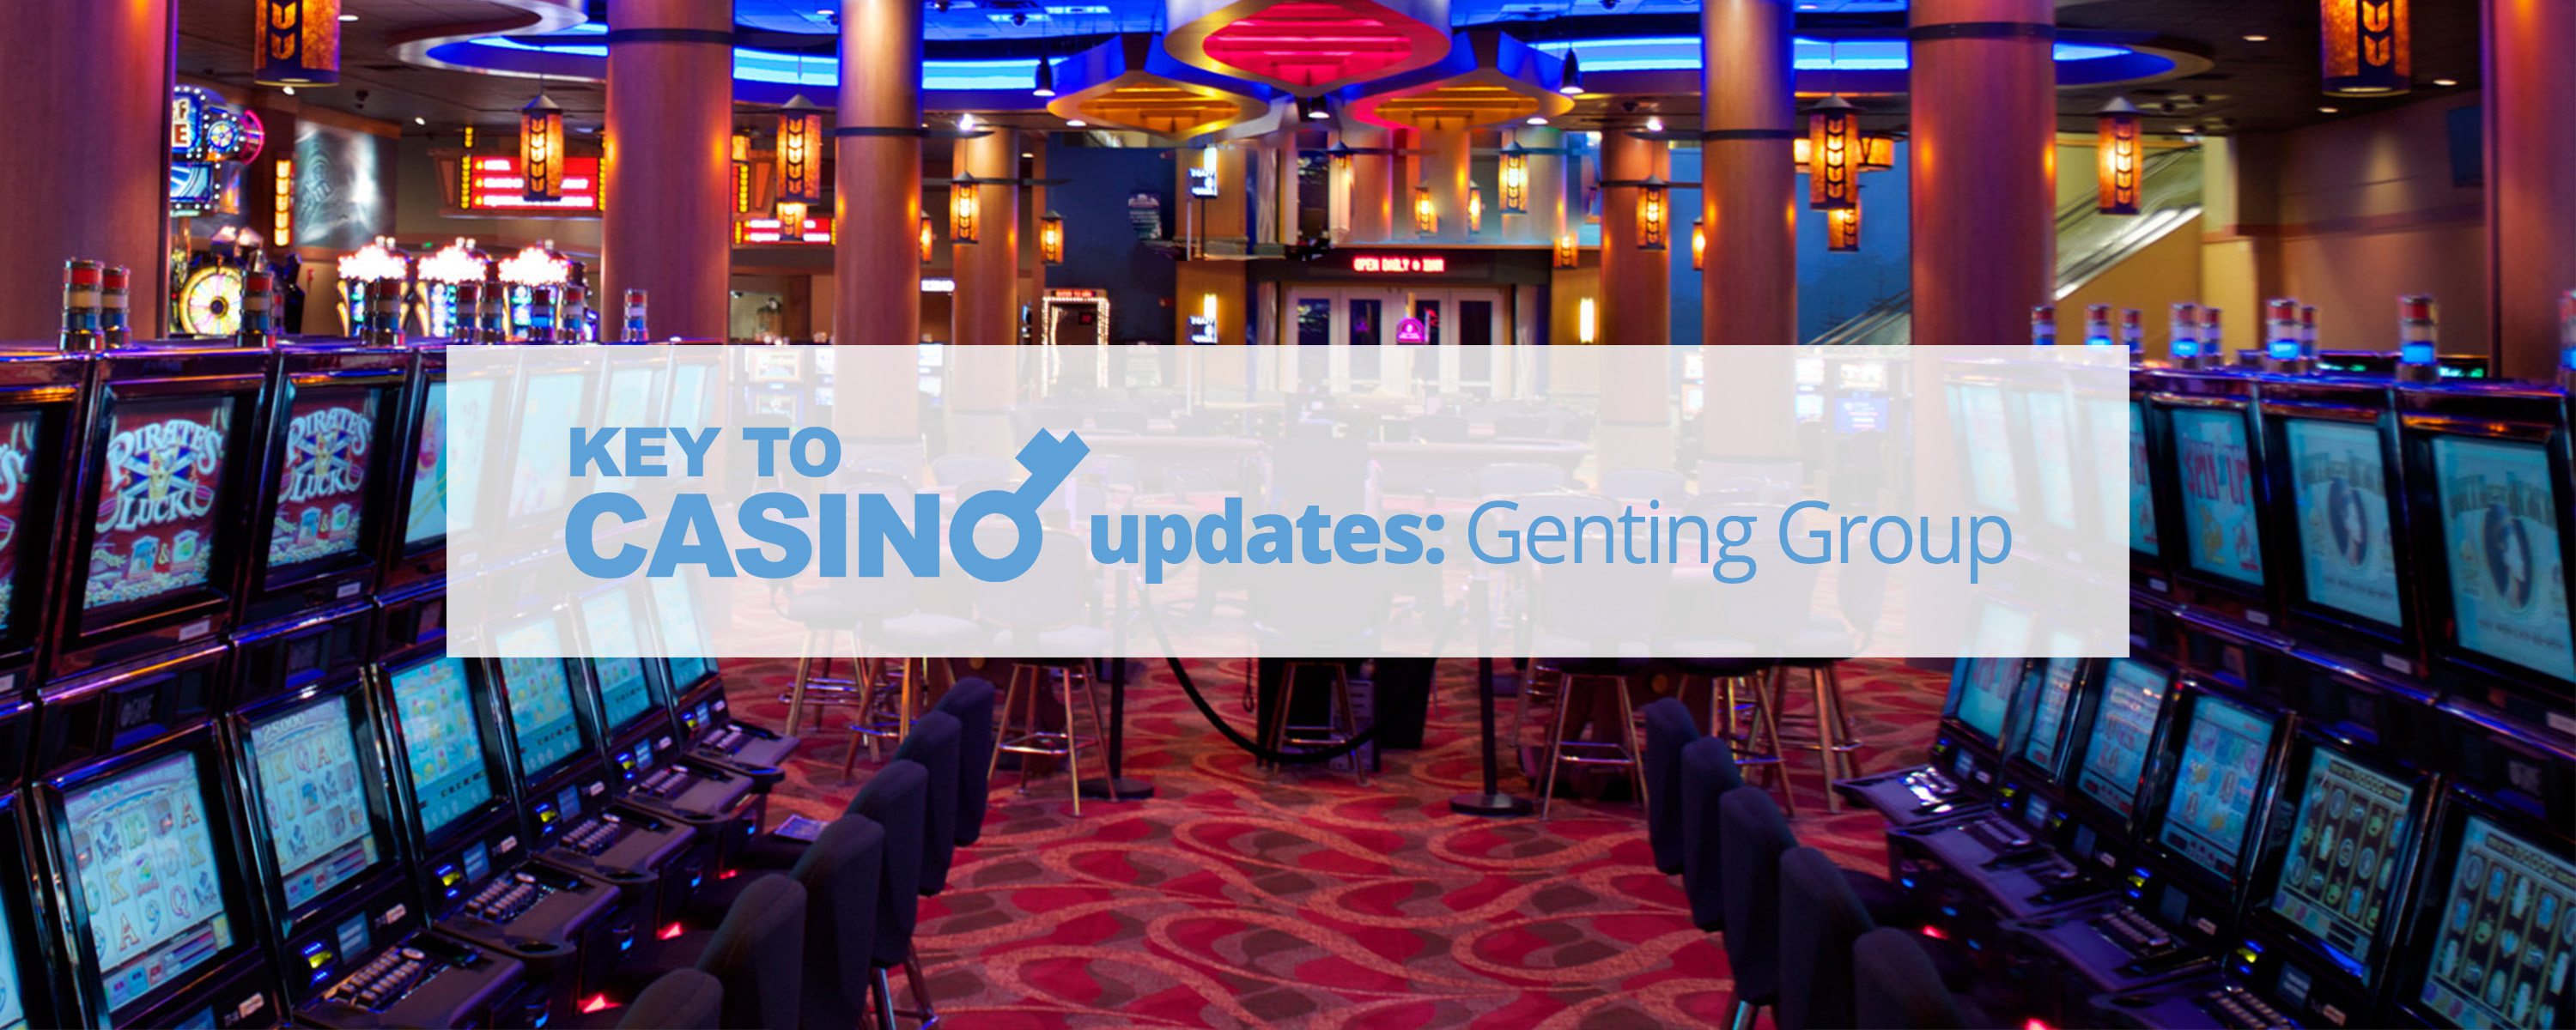 KeyToCasino Updates: Genting Group